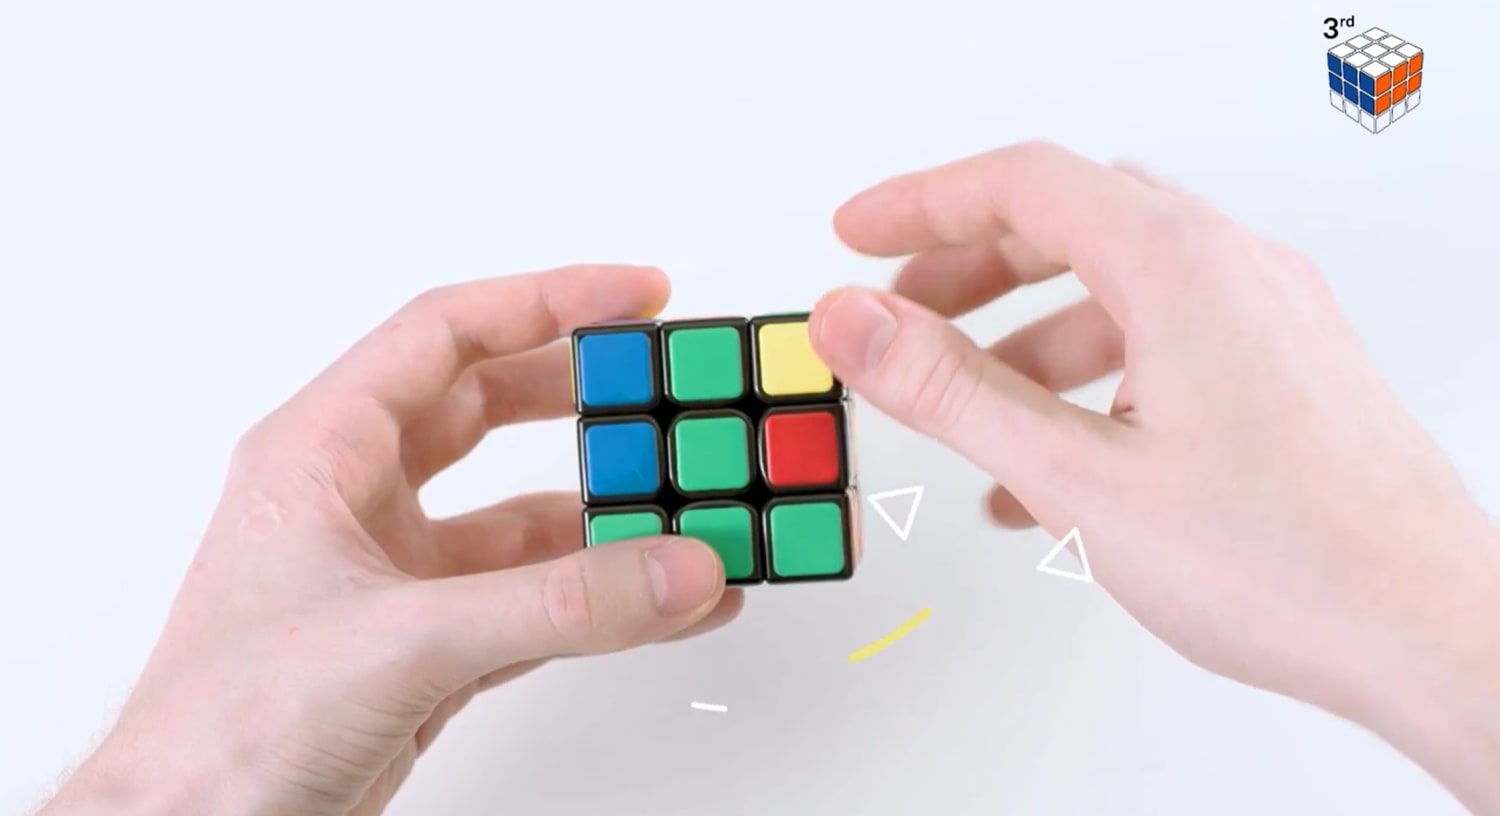 how play rubik's cube